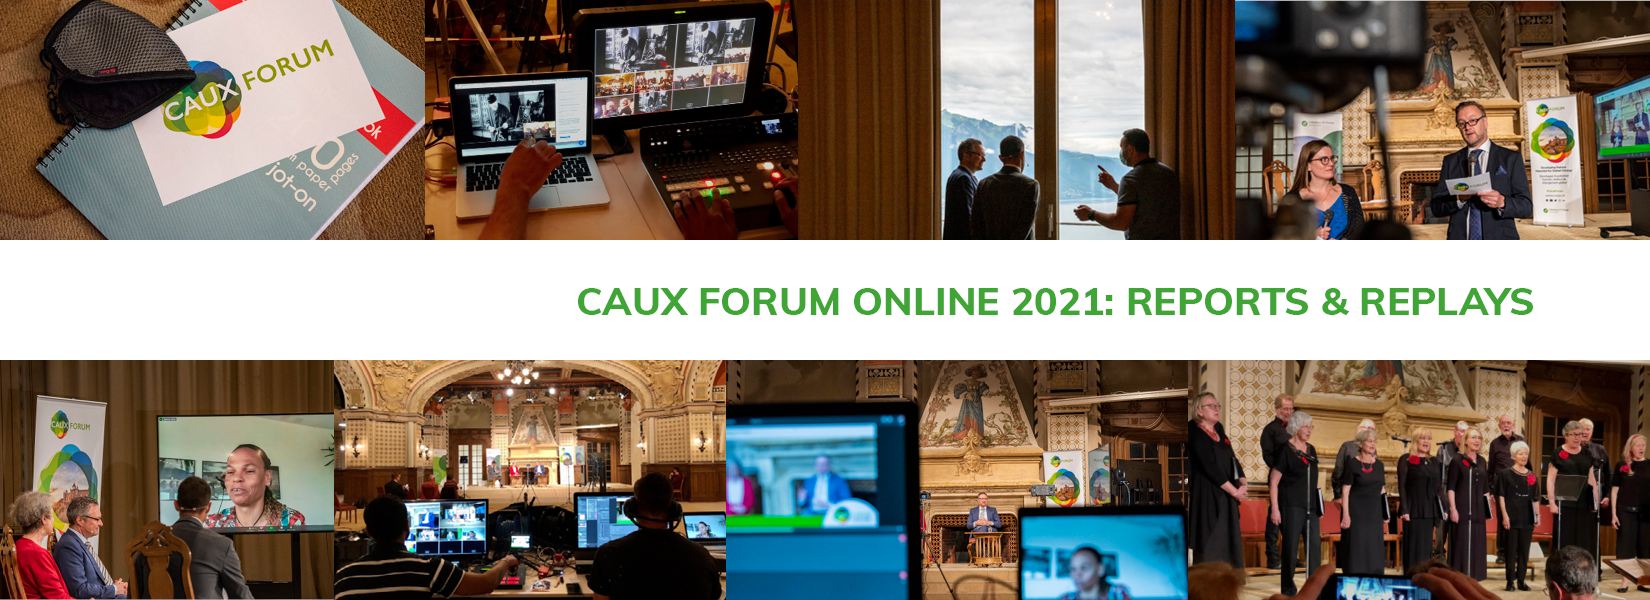 Caux Forum 2021 homepage reports & replays EN